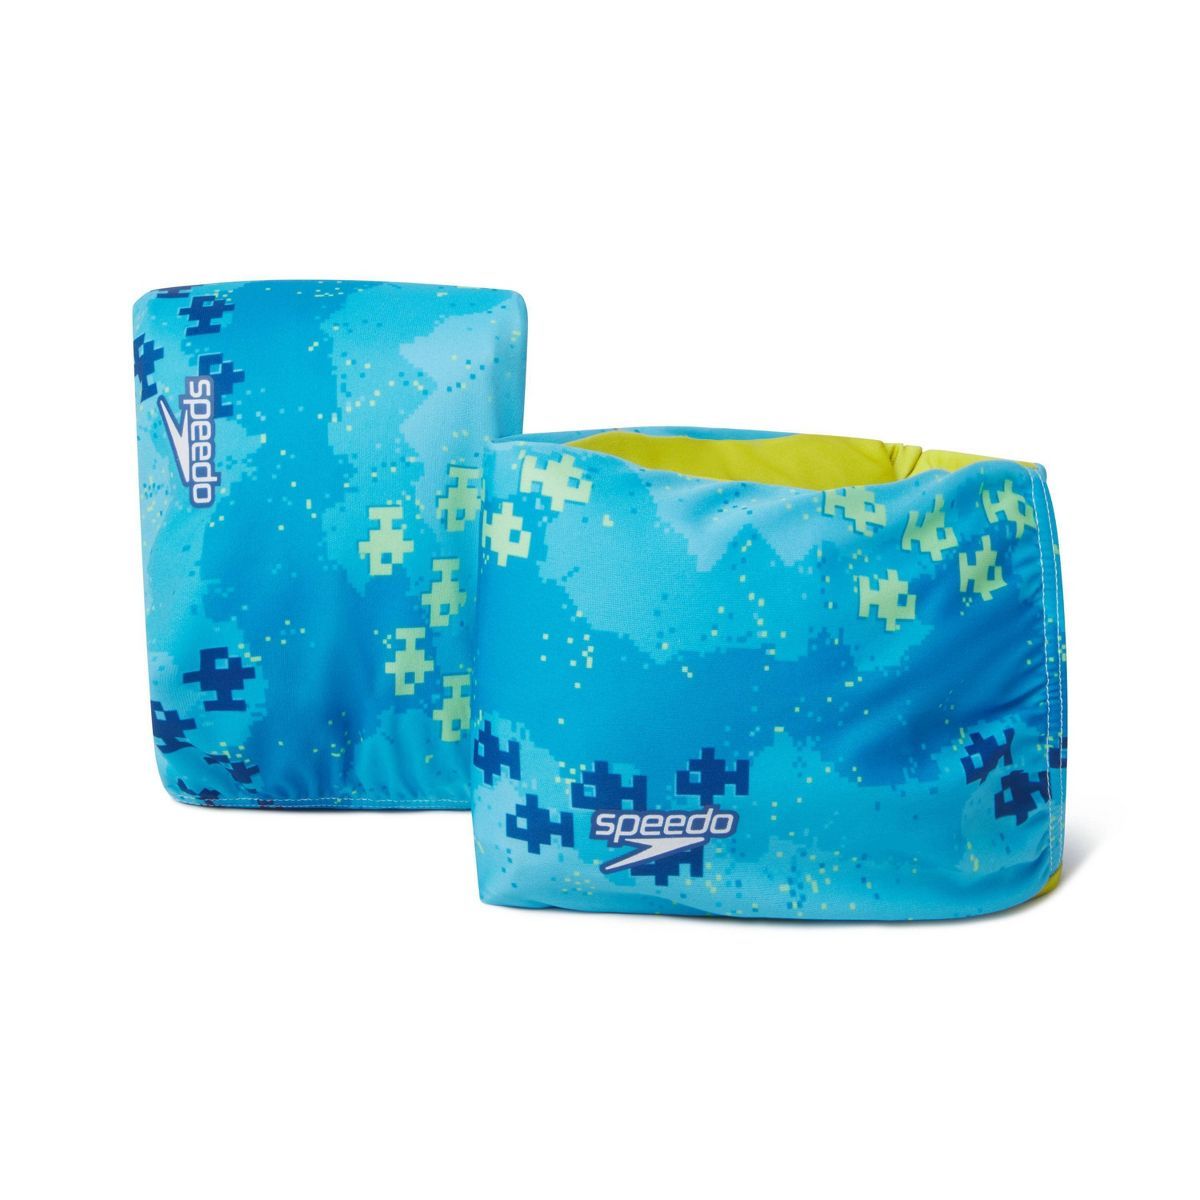 Speedo Toddler Fabric Armband - Blue/Yellow Fish | Target